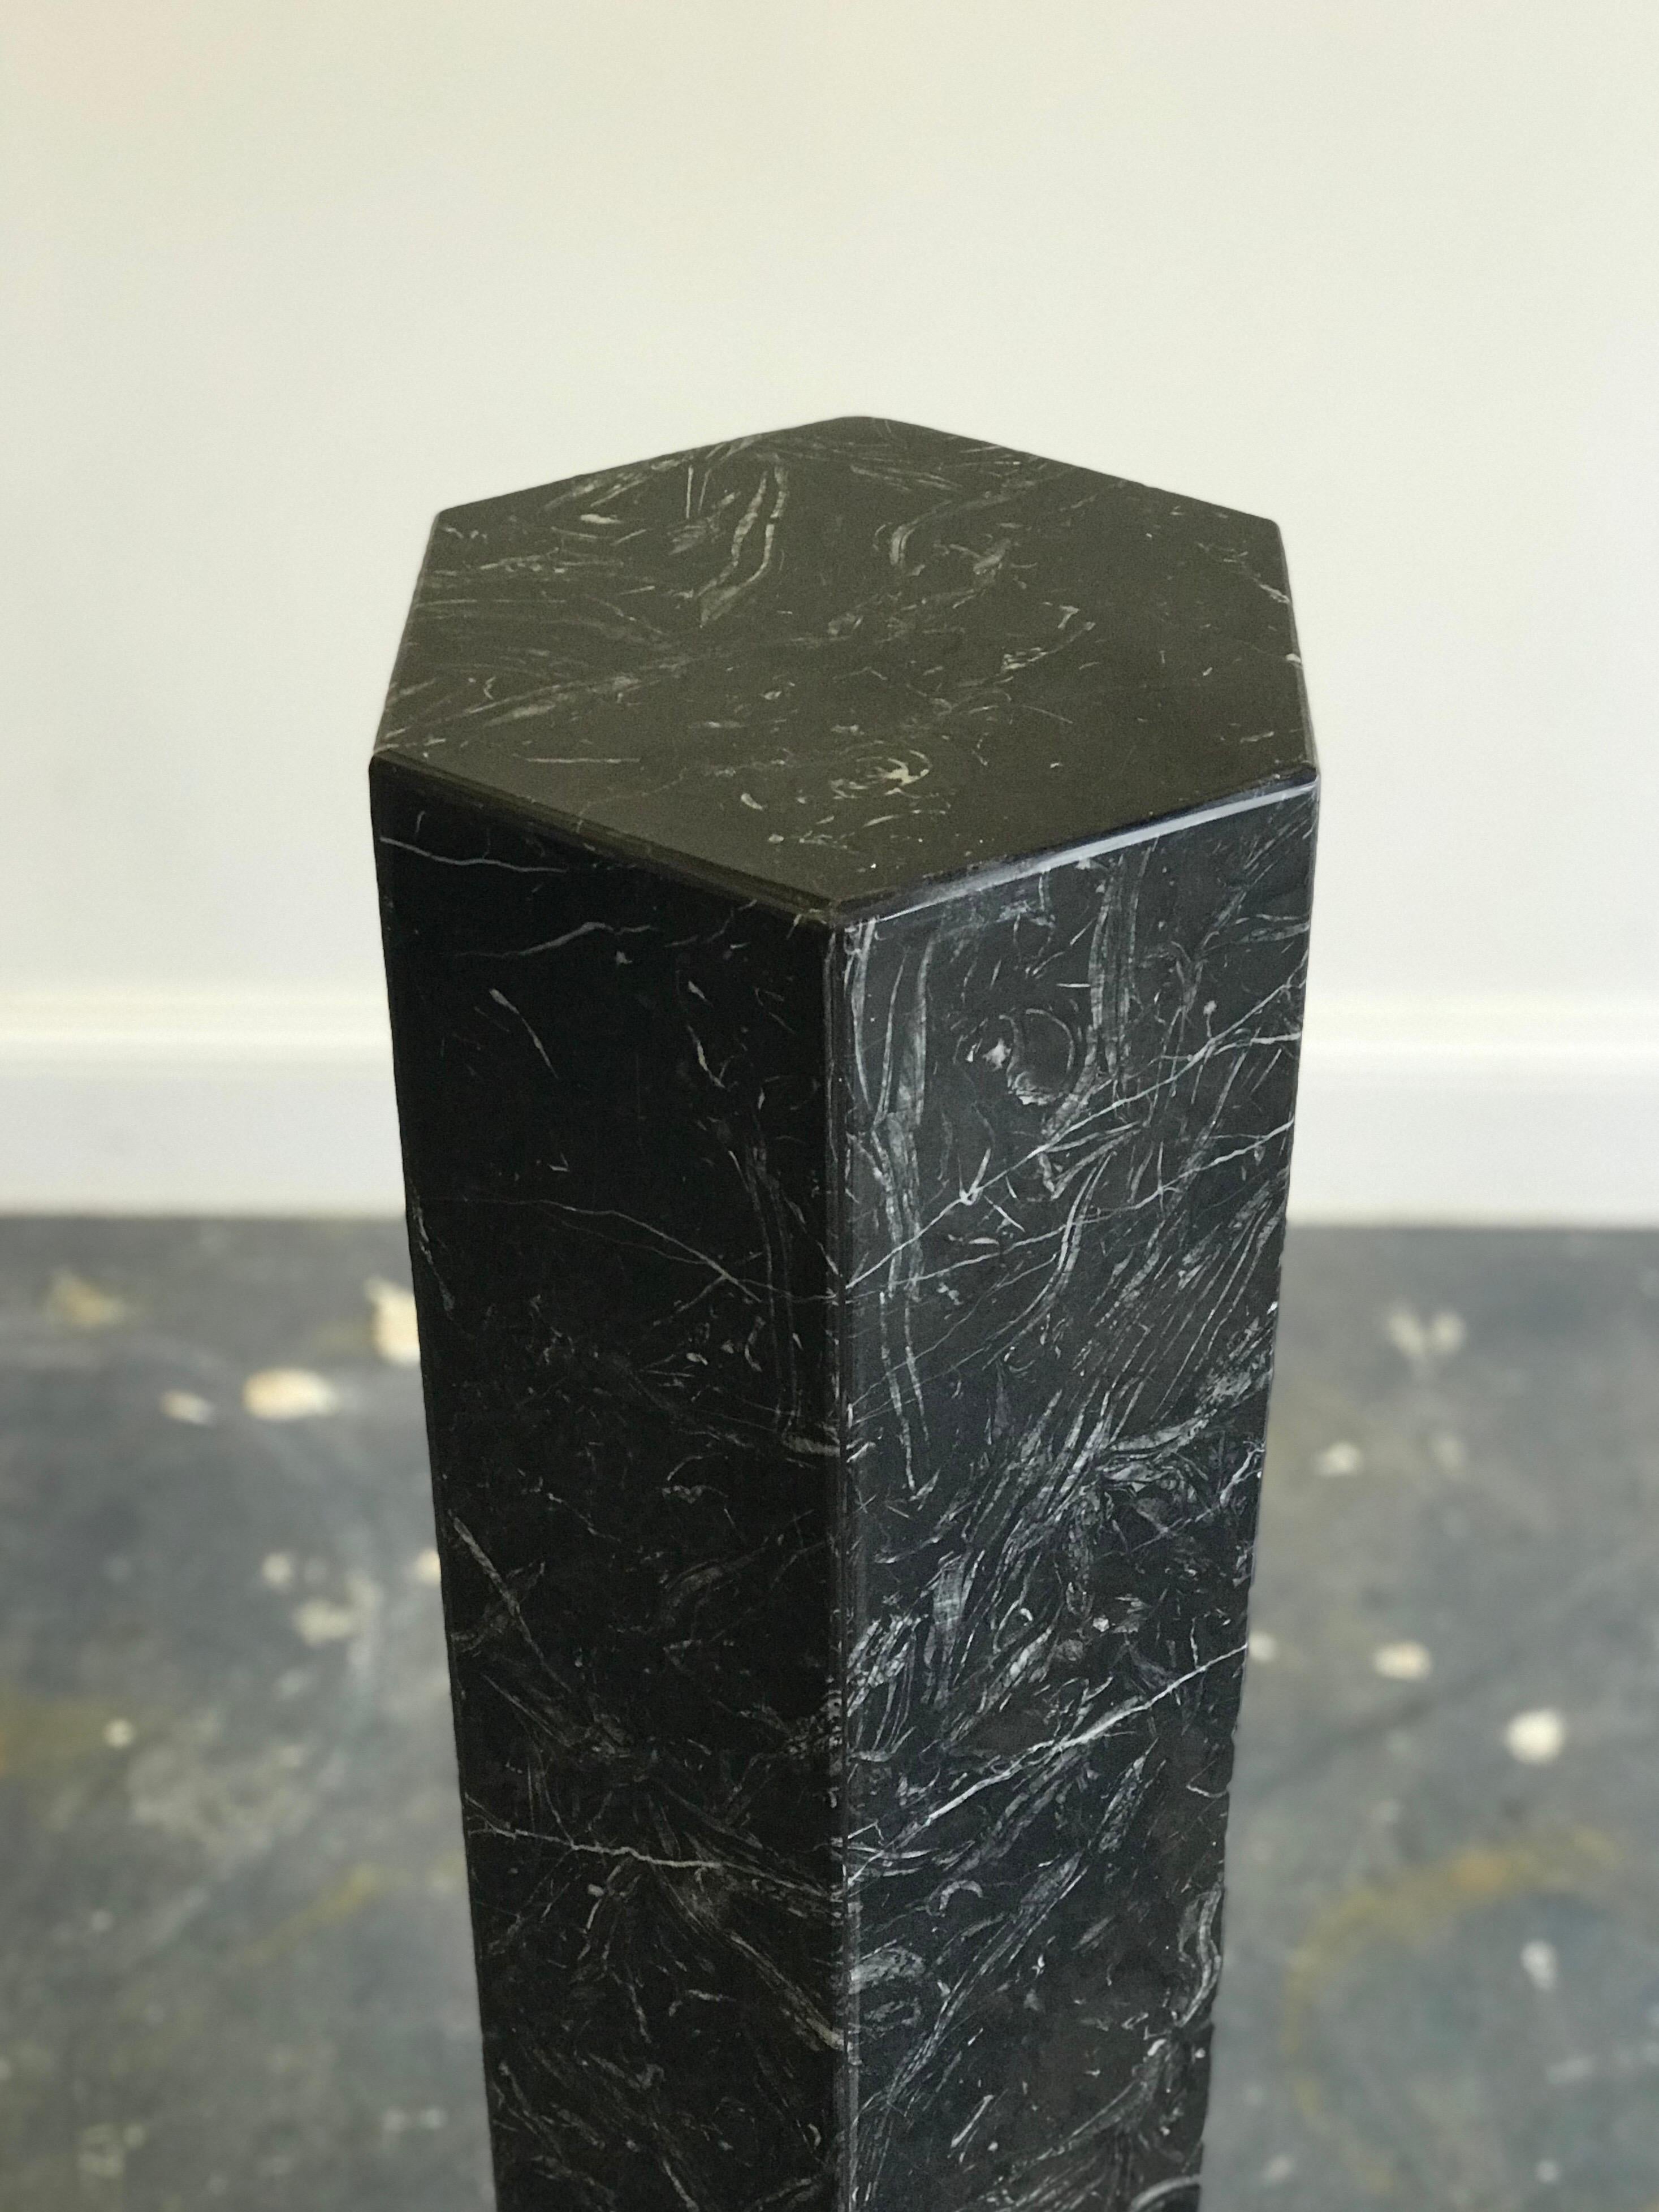 Elegant hexagonal black marble pedestal. Beautiful veining throughout. Very good condition. 

Measure: 35